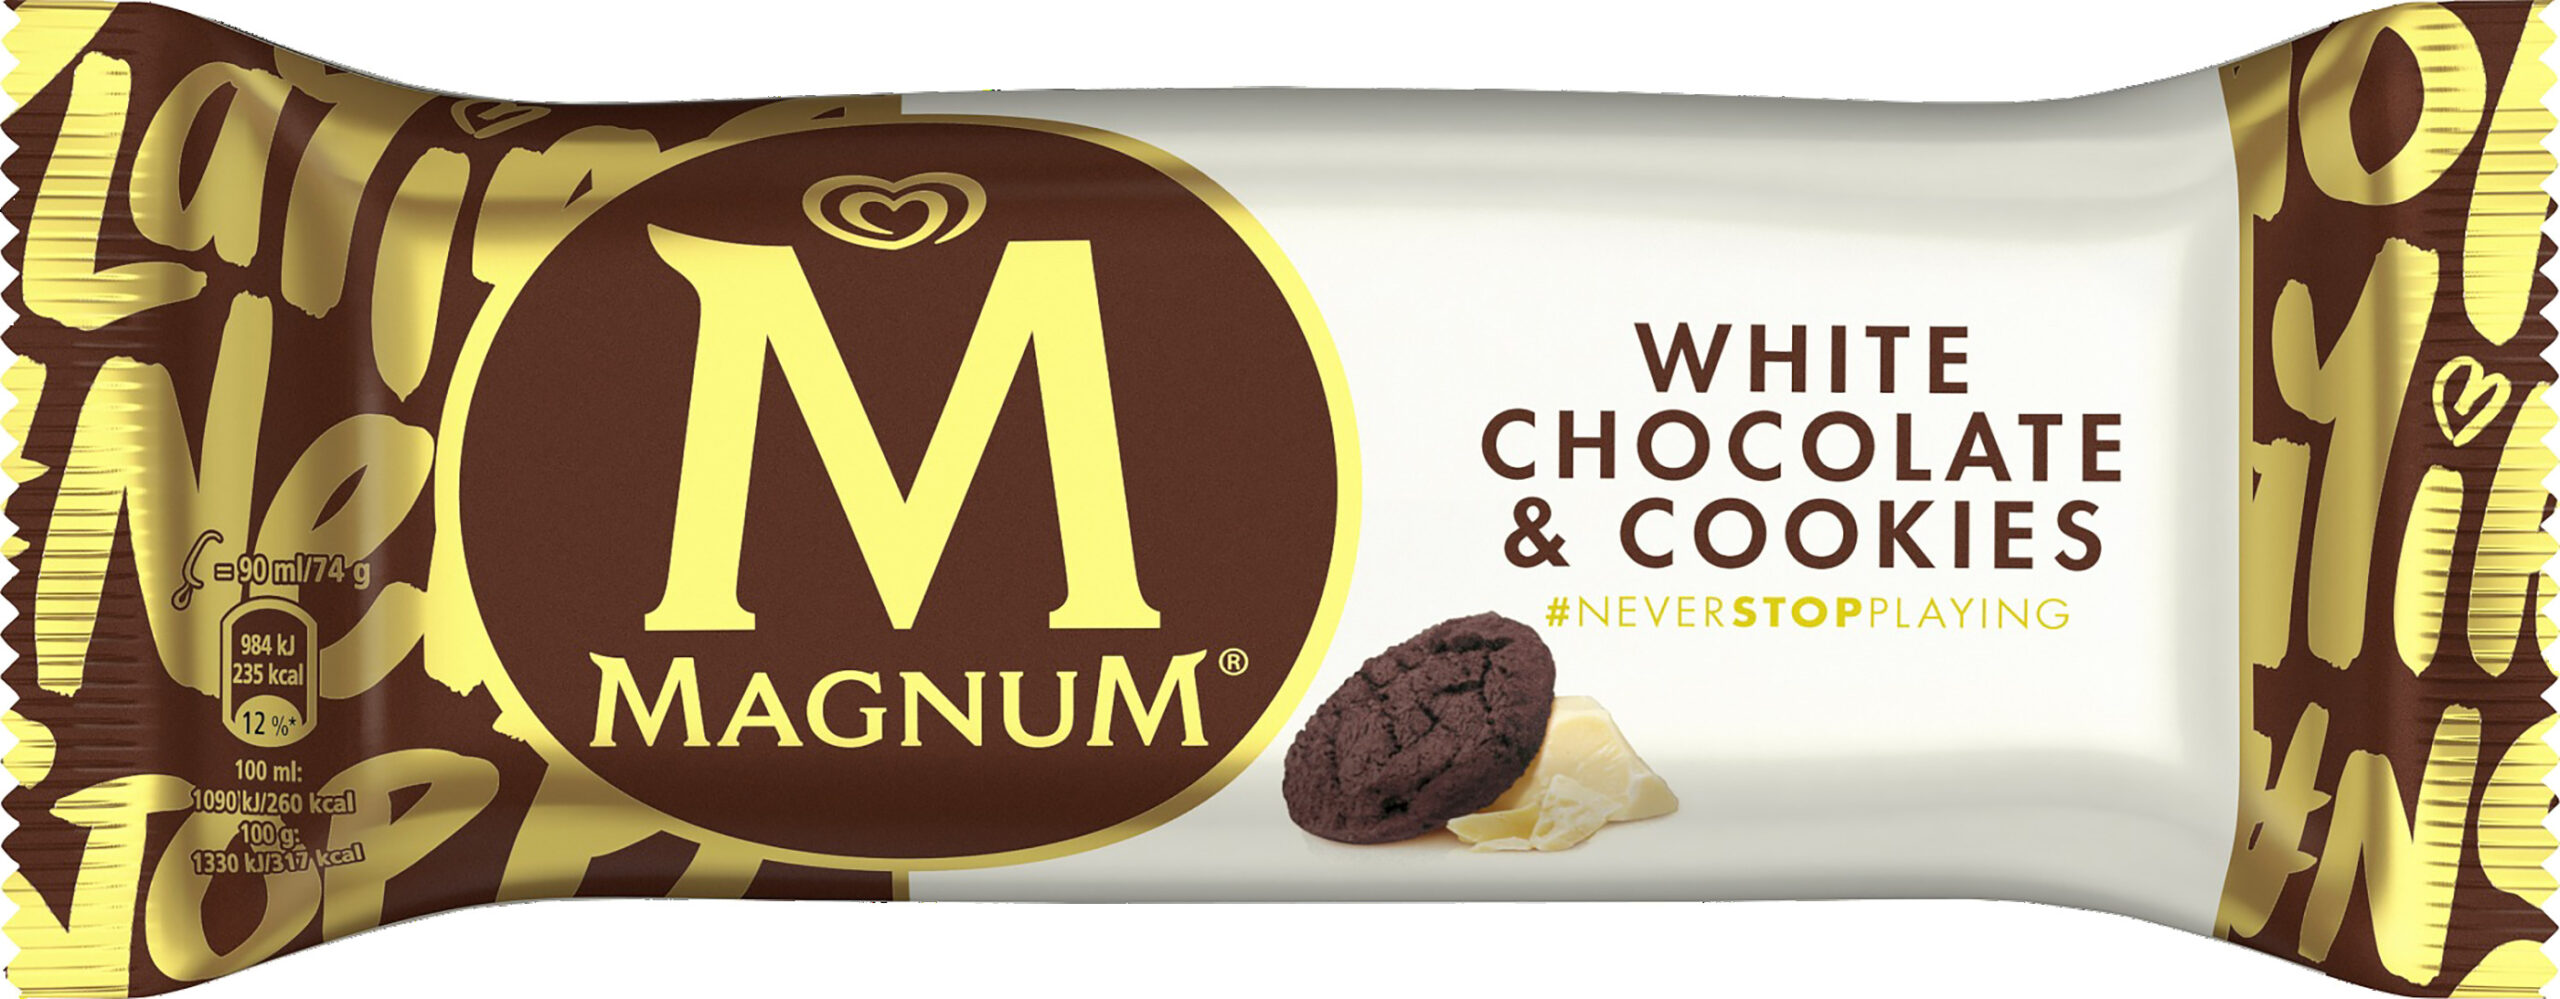 Nyhet - Magnum white chocolate & cookies